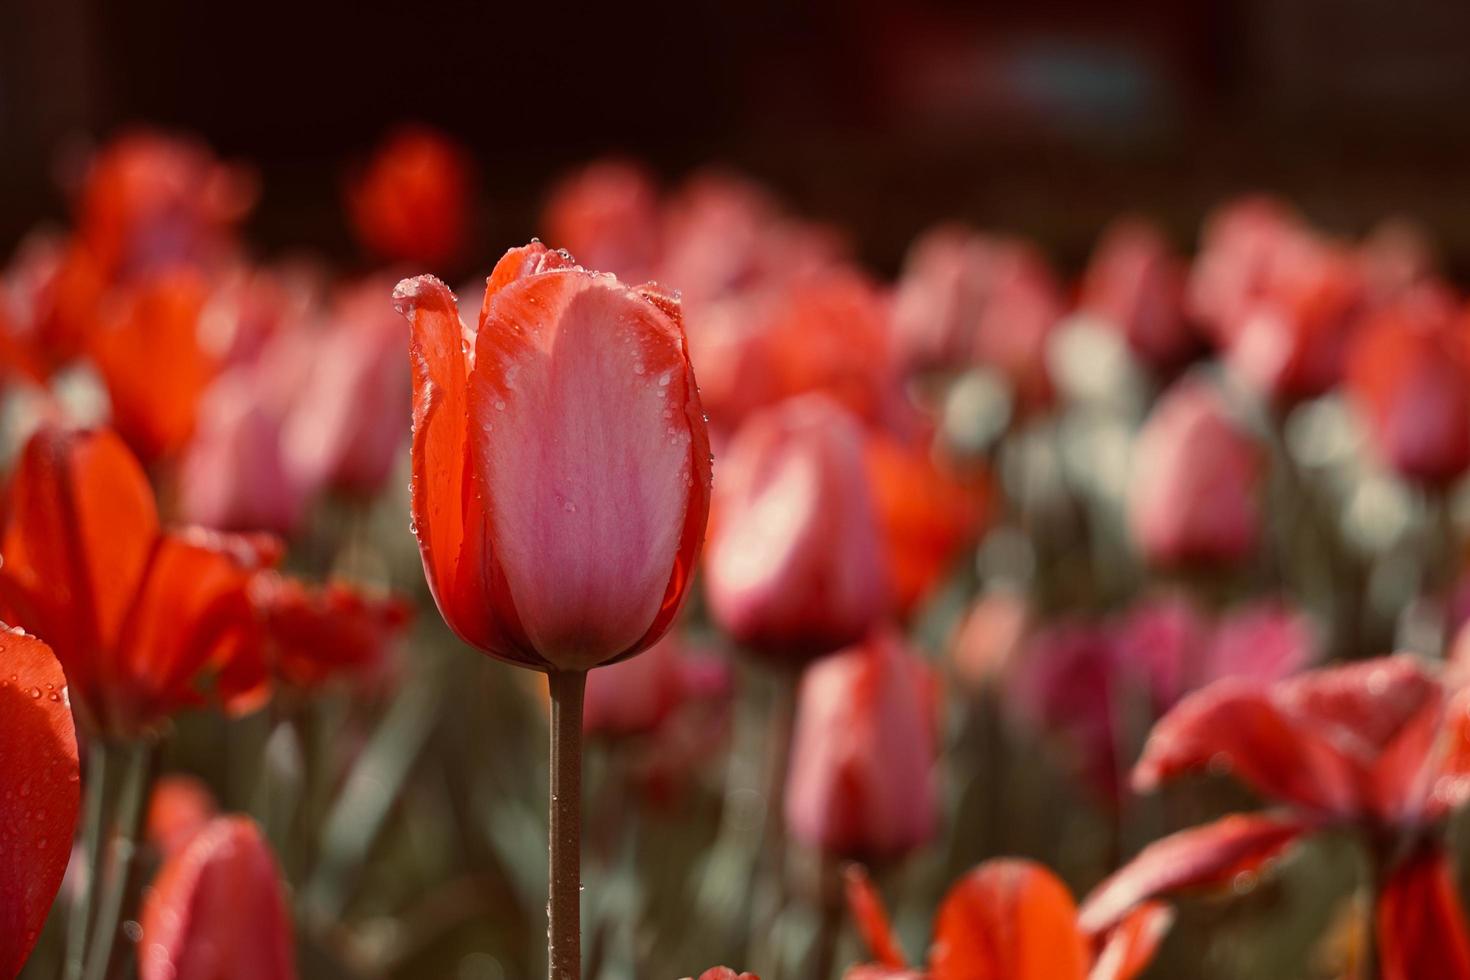 Romantic red tulips in the garden in spring season photo